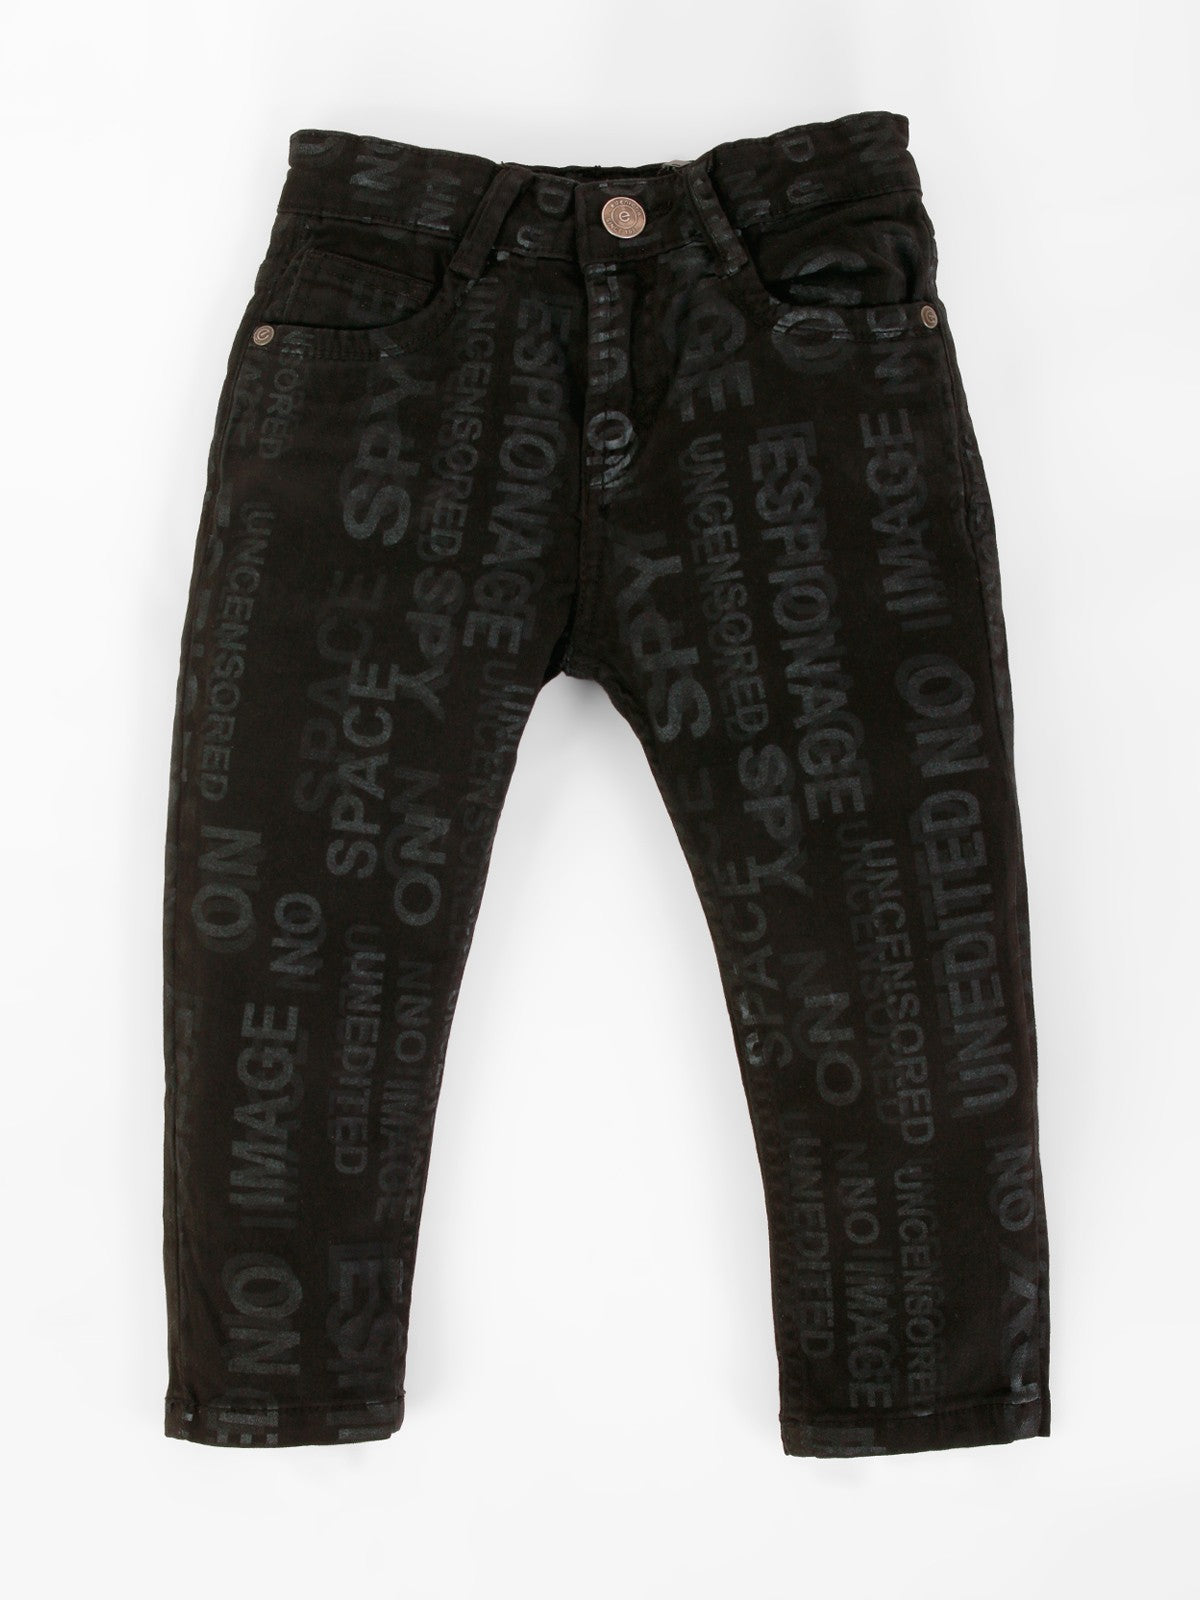 Boy's Black Denim Pant - EBBDP20-016